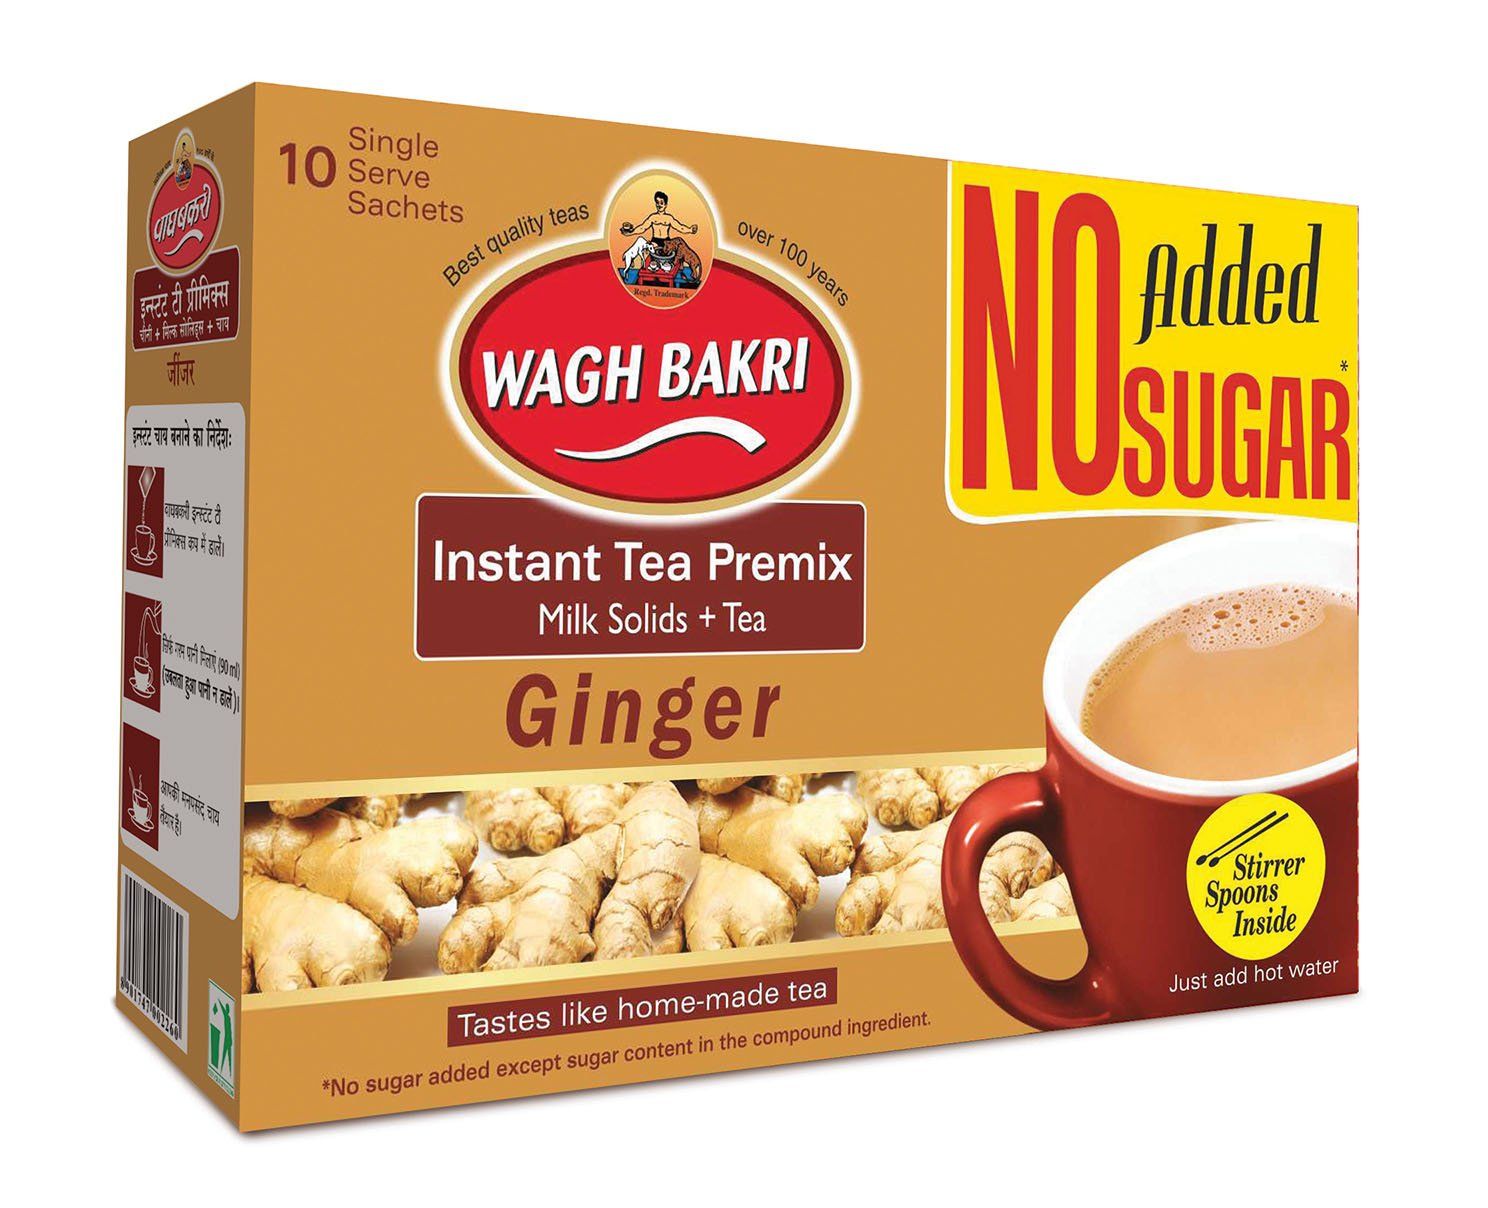 Wagh Bakri Instant Premix Ginger Image